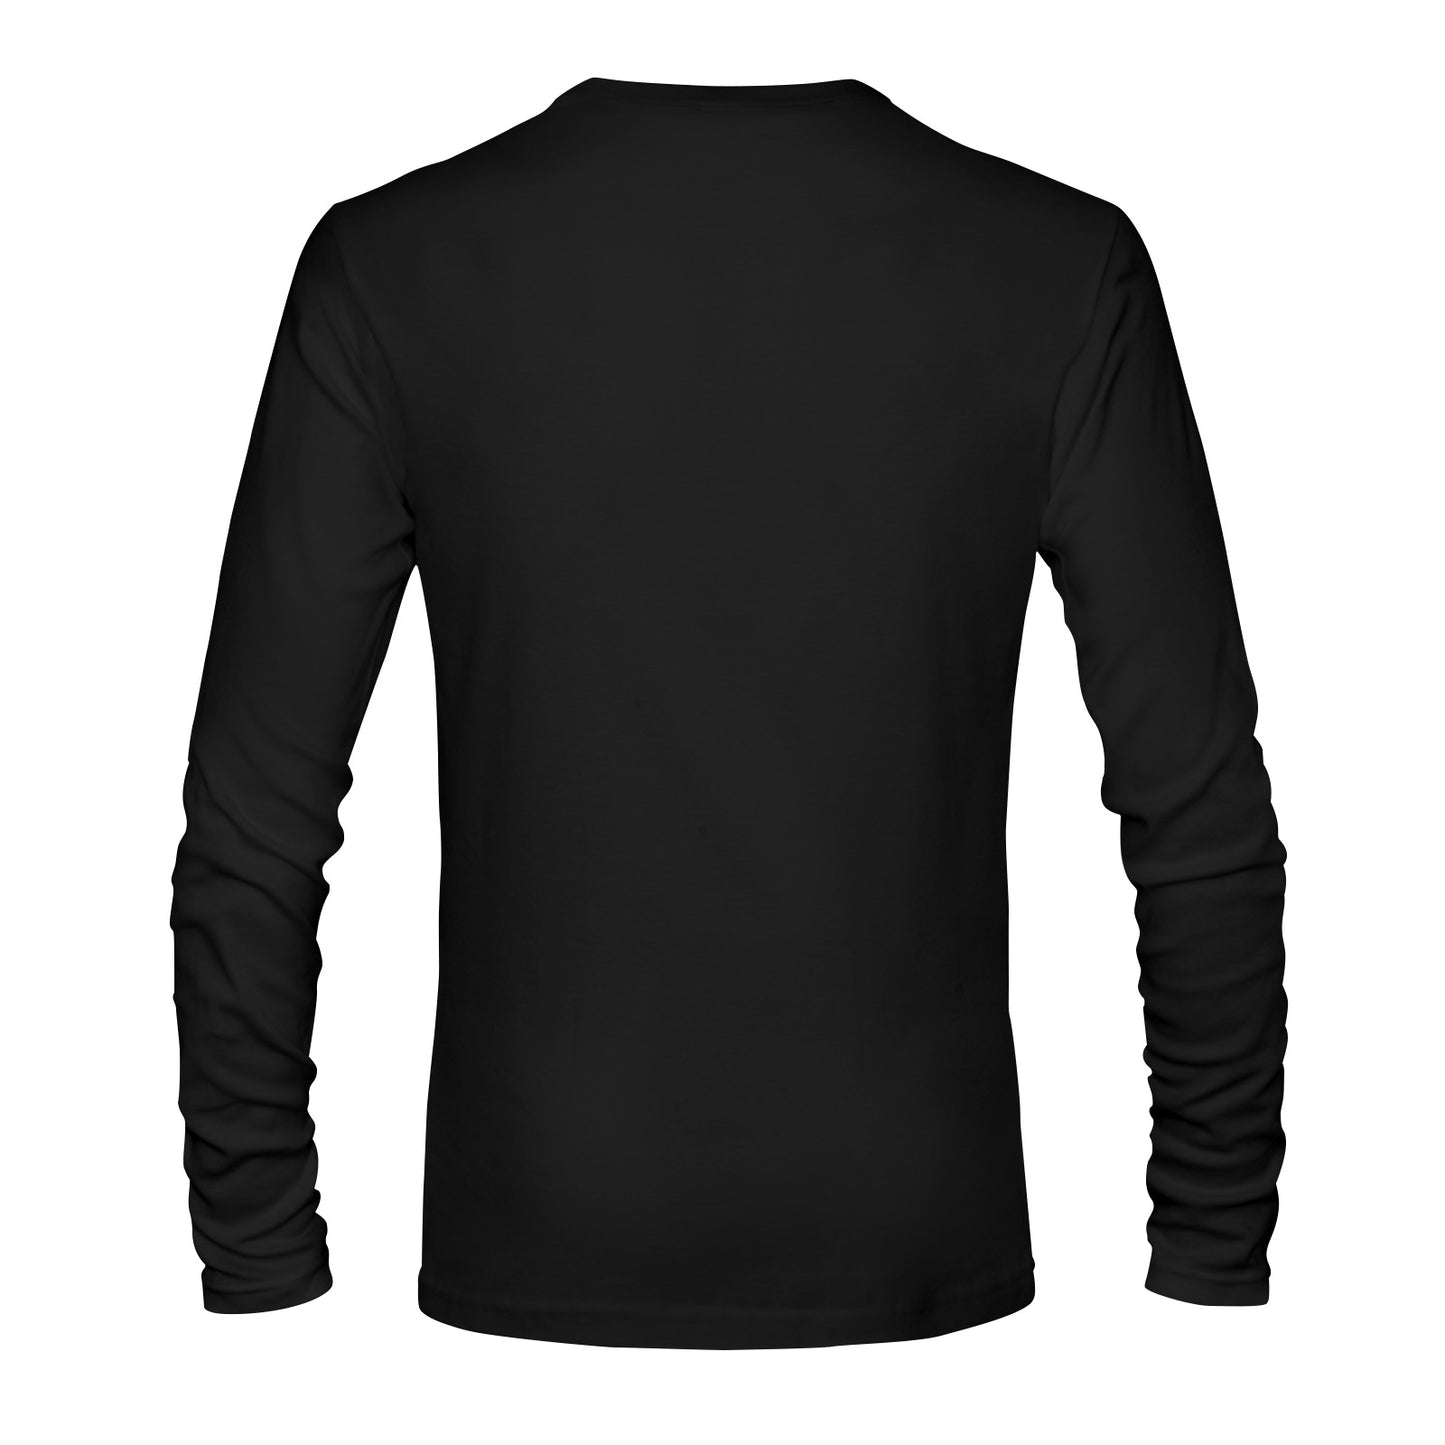 Jet Black Collection Men's Long sleeve T-shirt T08 - ELITA IMPERIA INC.